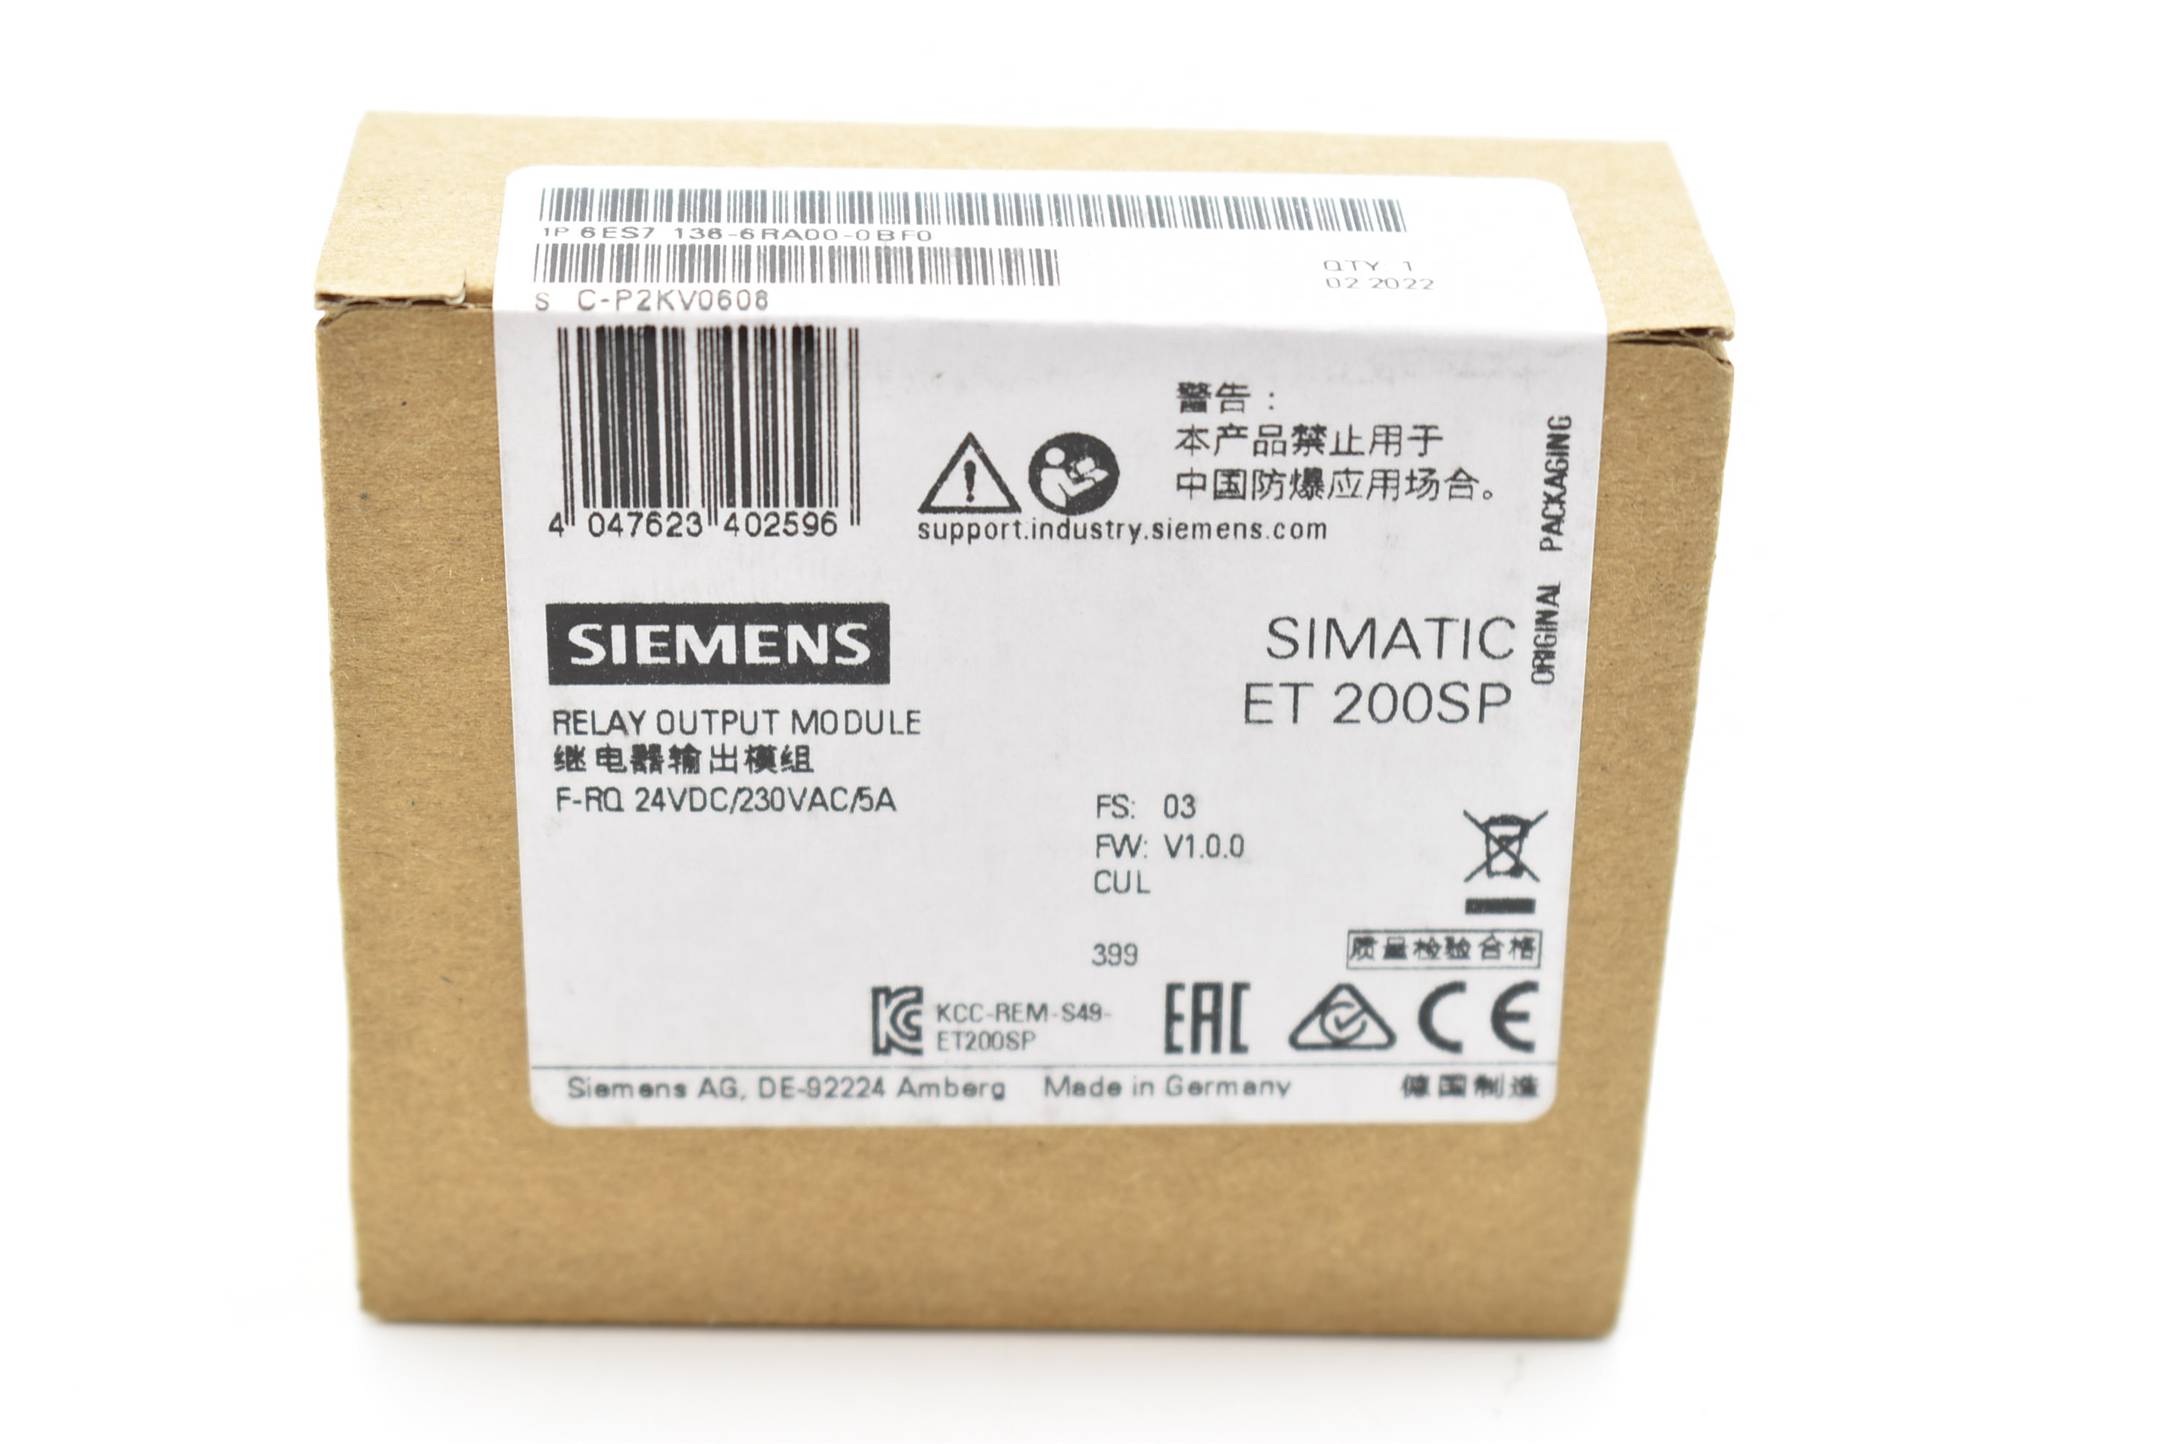 Siemens simatic ET 200SP 6ES7 136-6RA00-0BF0 ( 6ES7136-6RA00-0BF0 ) E.3